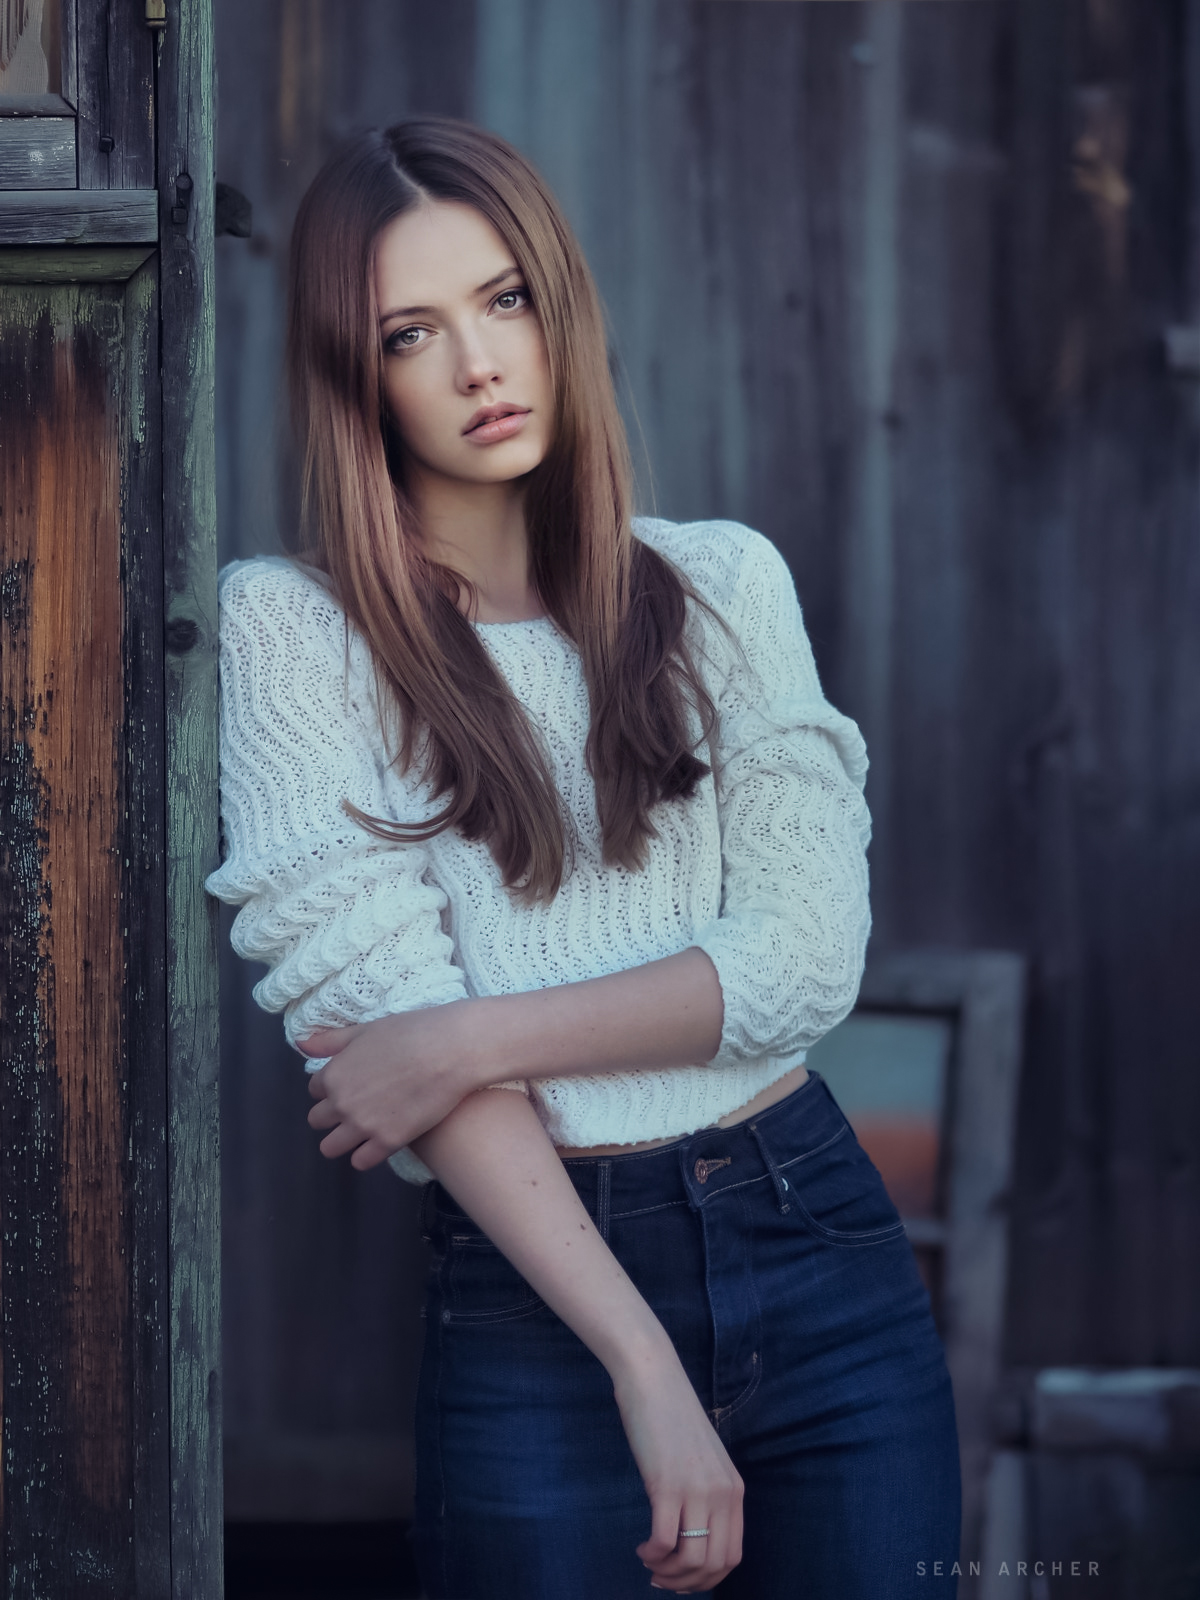 Women Brunette Long Hair Straight Hair Sweater Jeans Denim Wooden Surface 1200x1600